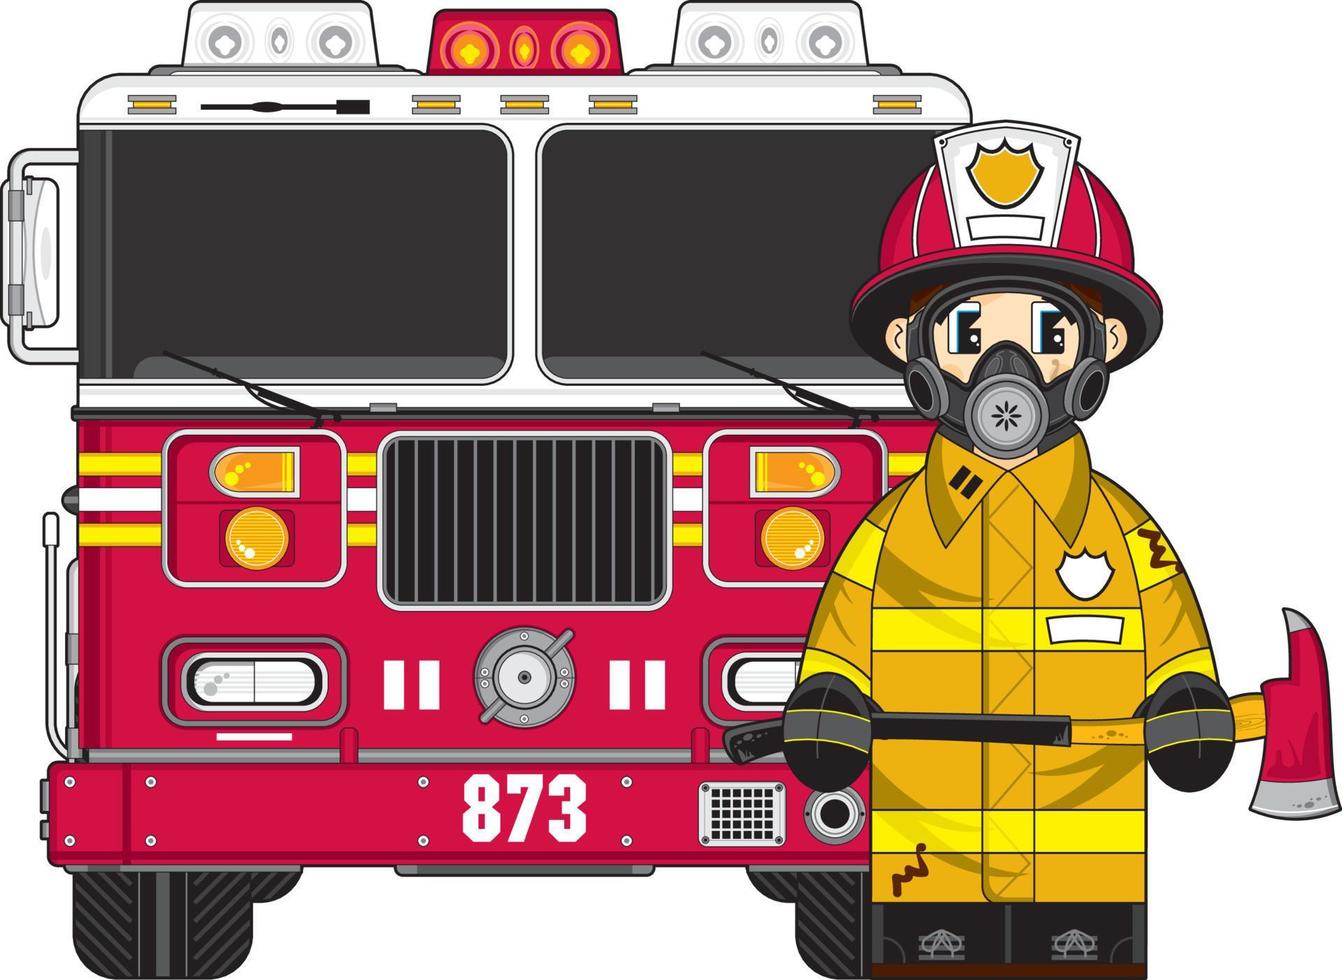 Cute Cartoon Fireman and Fire Engine vector